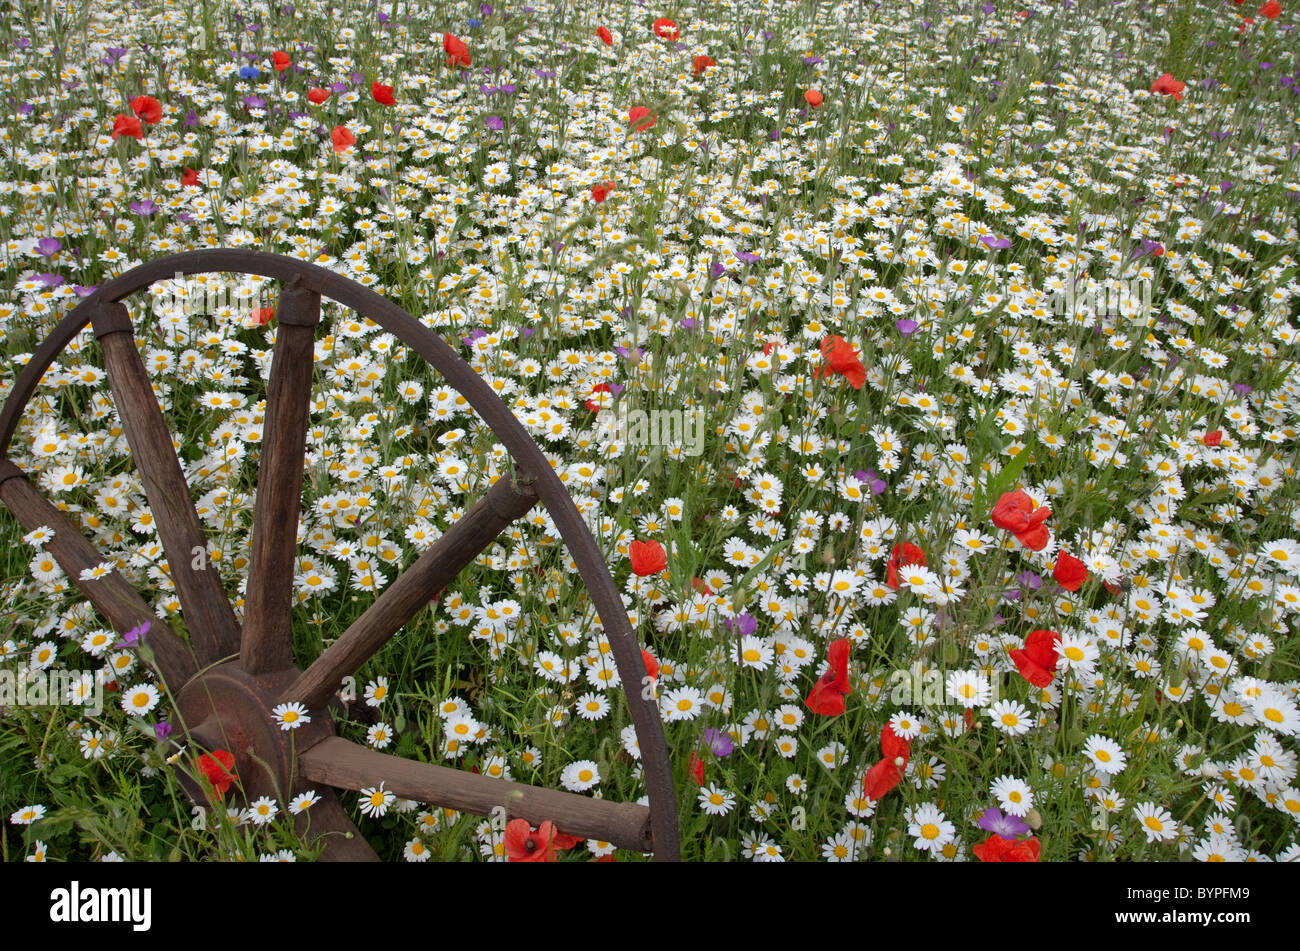 Abandoned old farm wagon wheel with wild meadow flowers growing around it  Stock Photo - Alamy